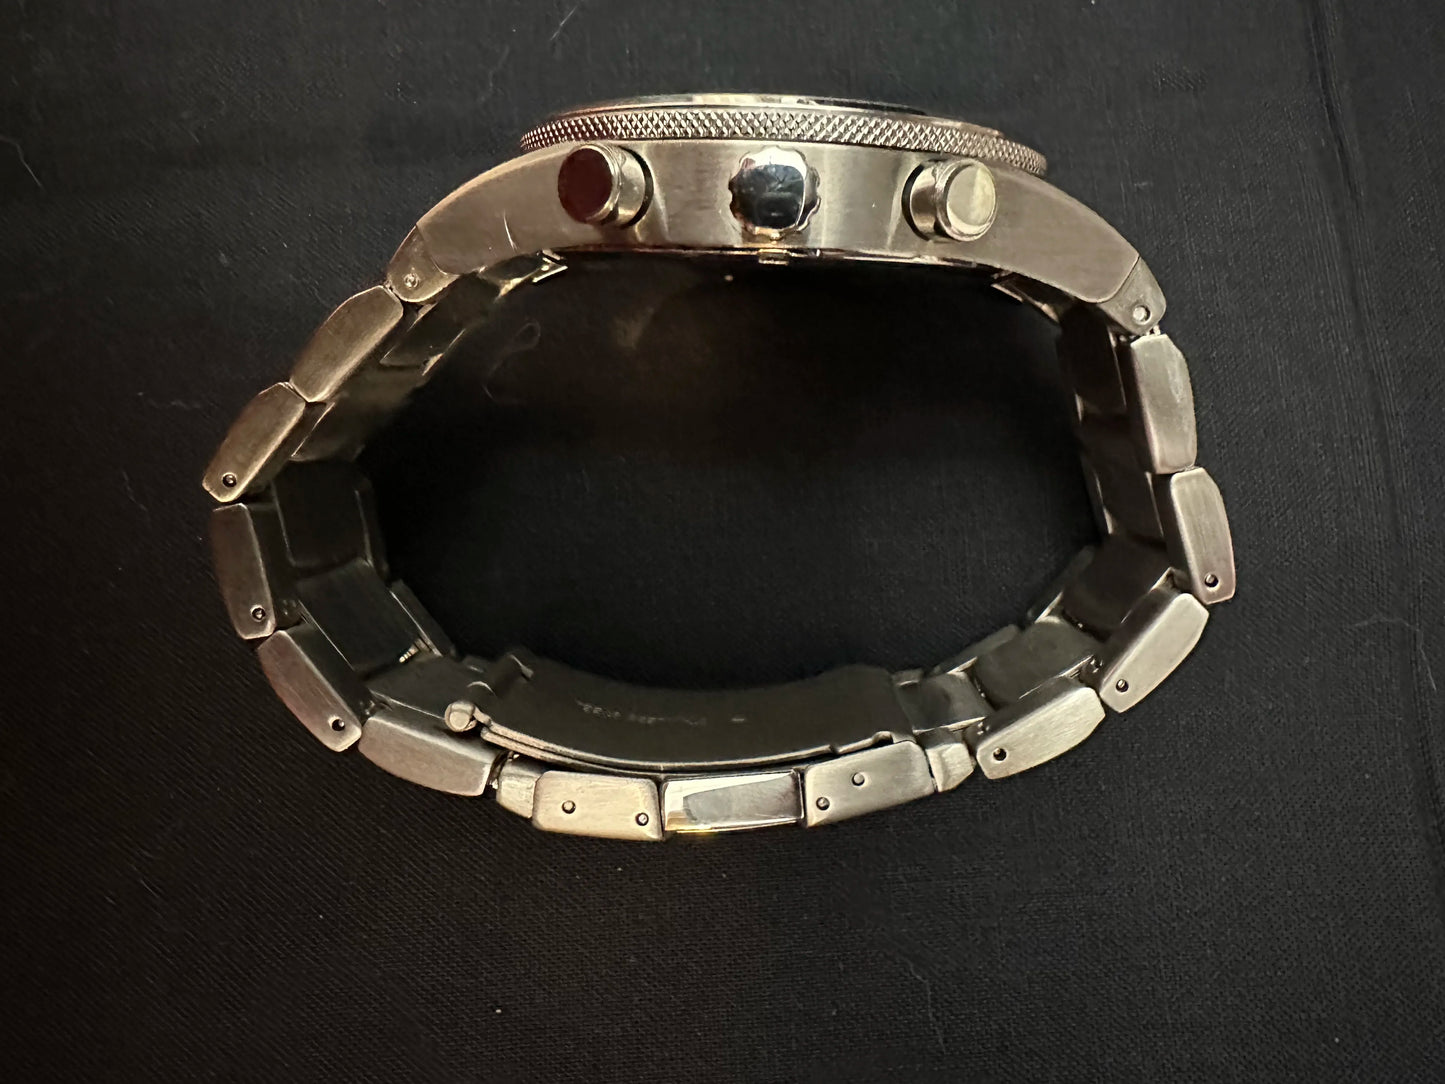 Fossil - Men's Quartz Chronograph Model FS-4249 Jumbo Face Watch Water Resistant